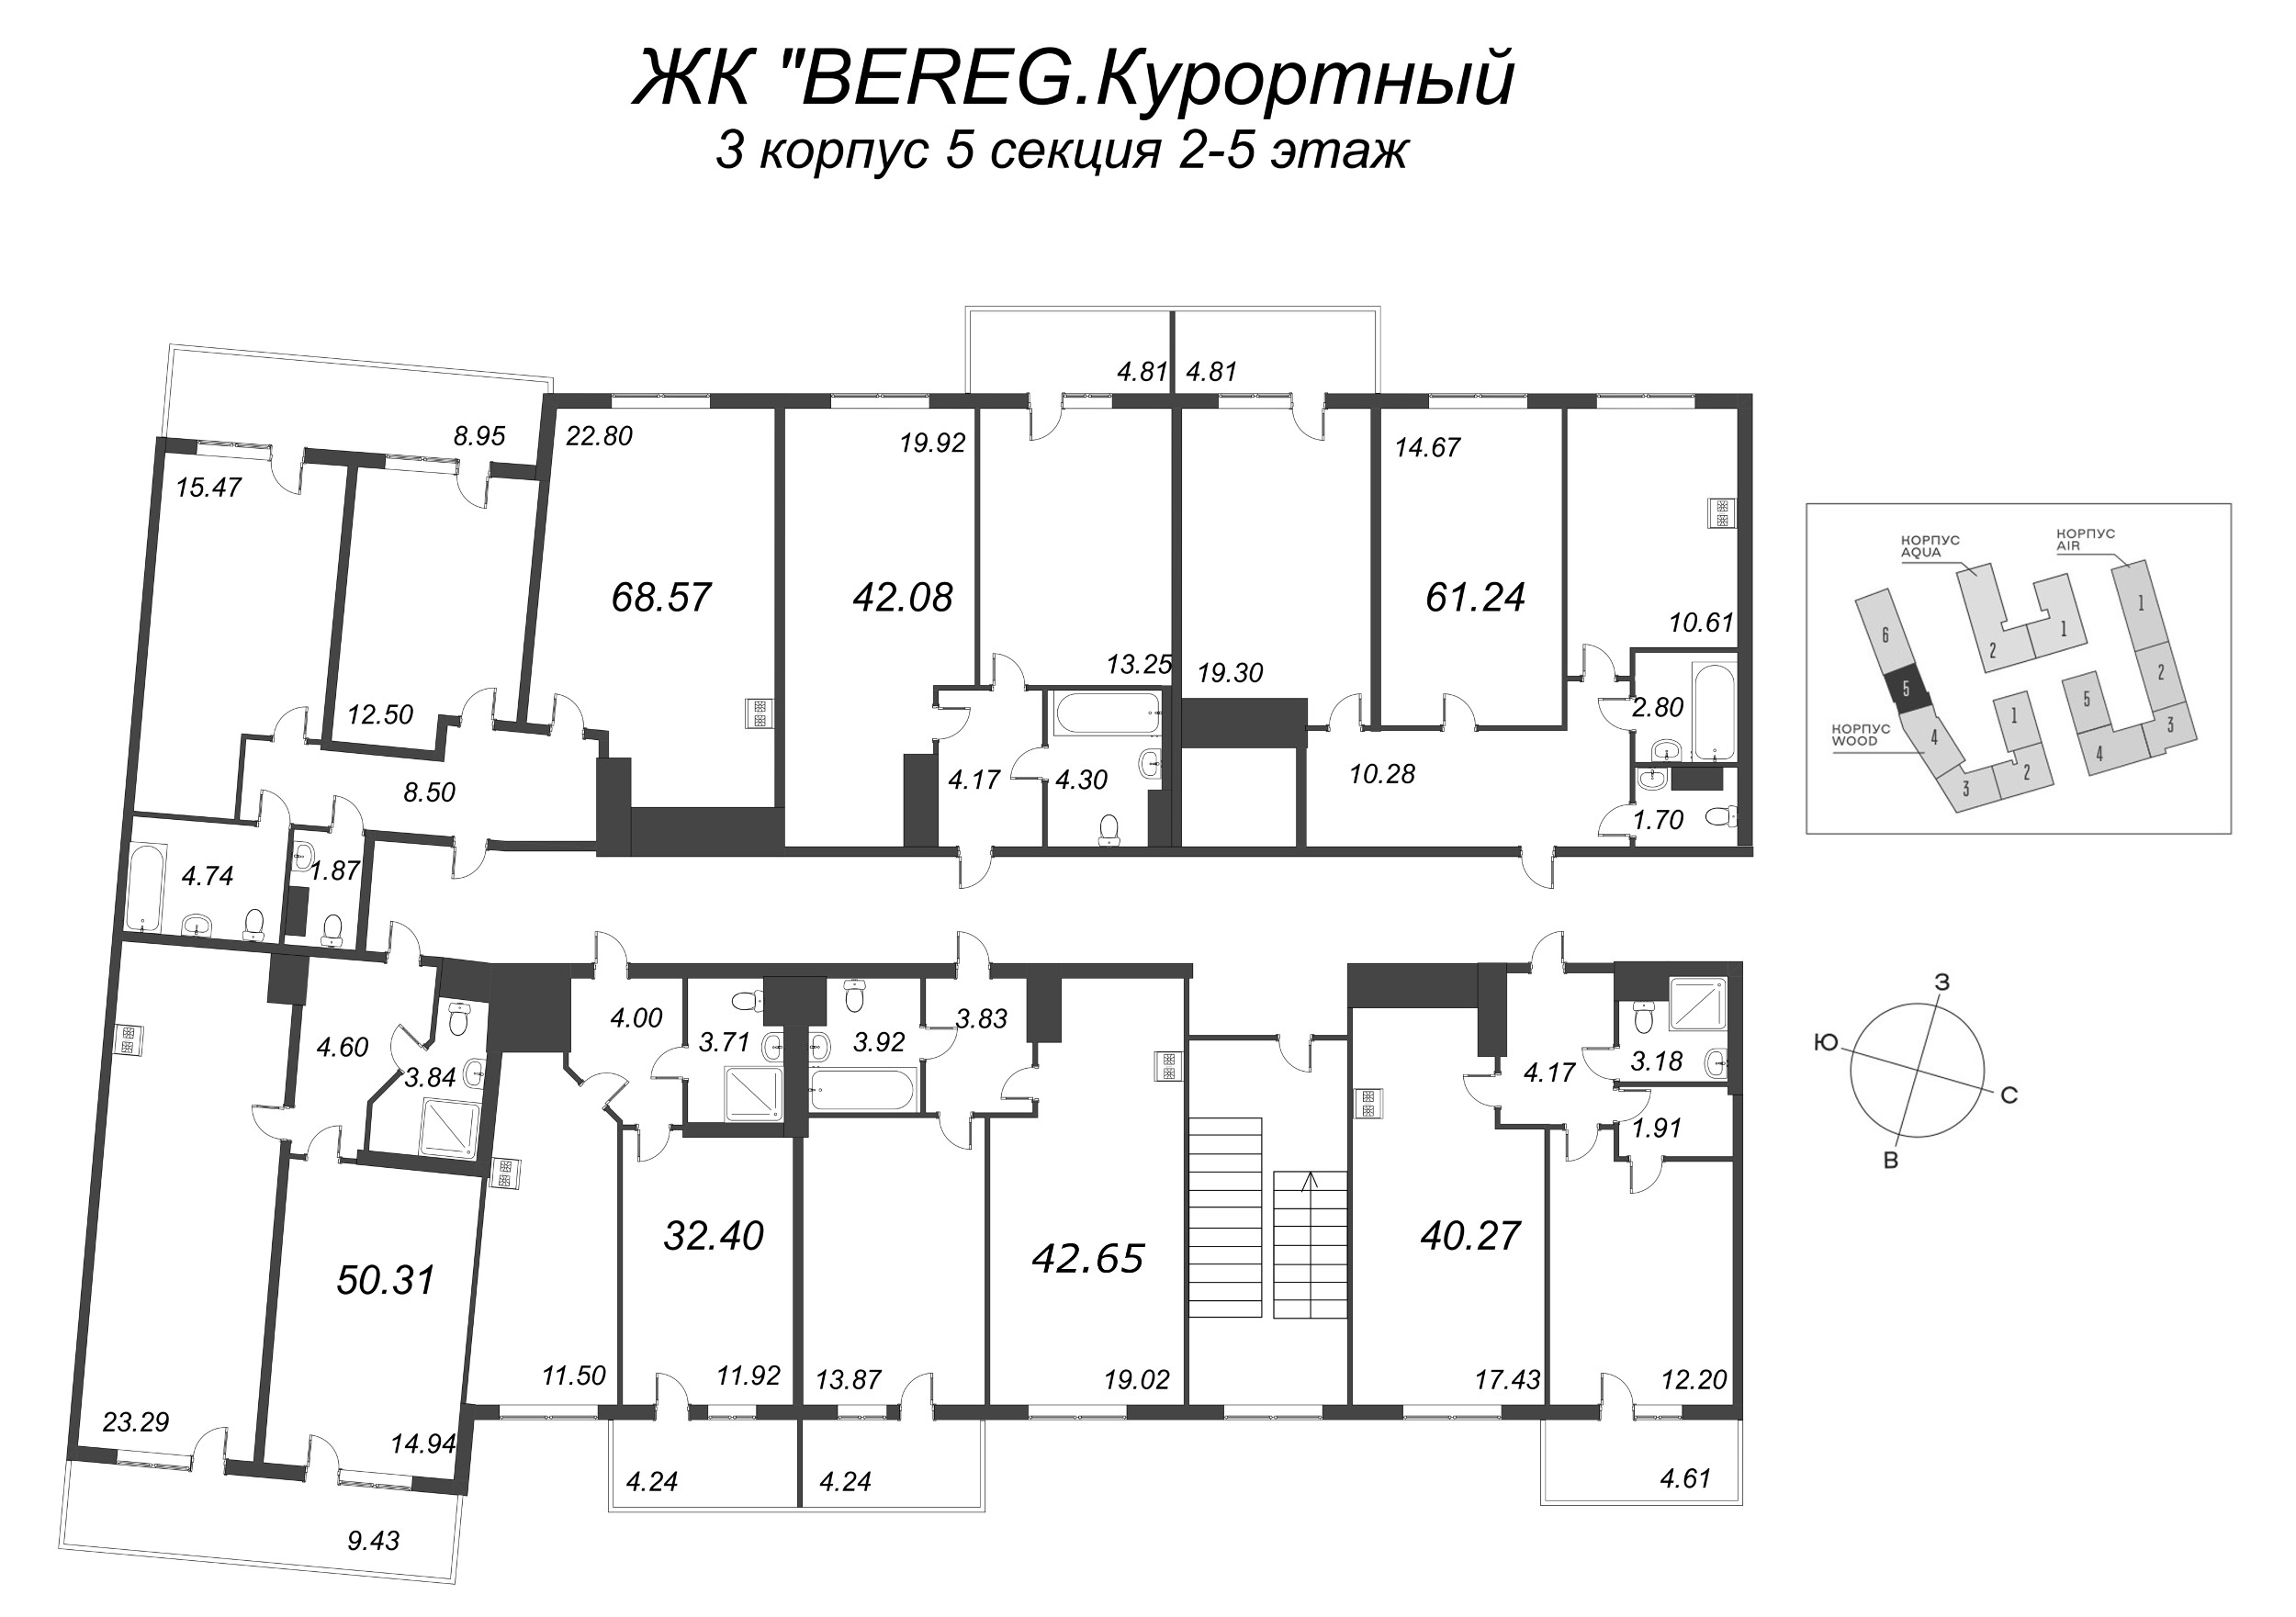 2-комнатная (Евро) квартира, 42.08 м² - планировка этажа